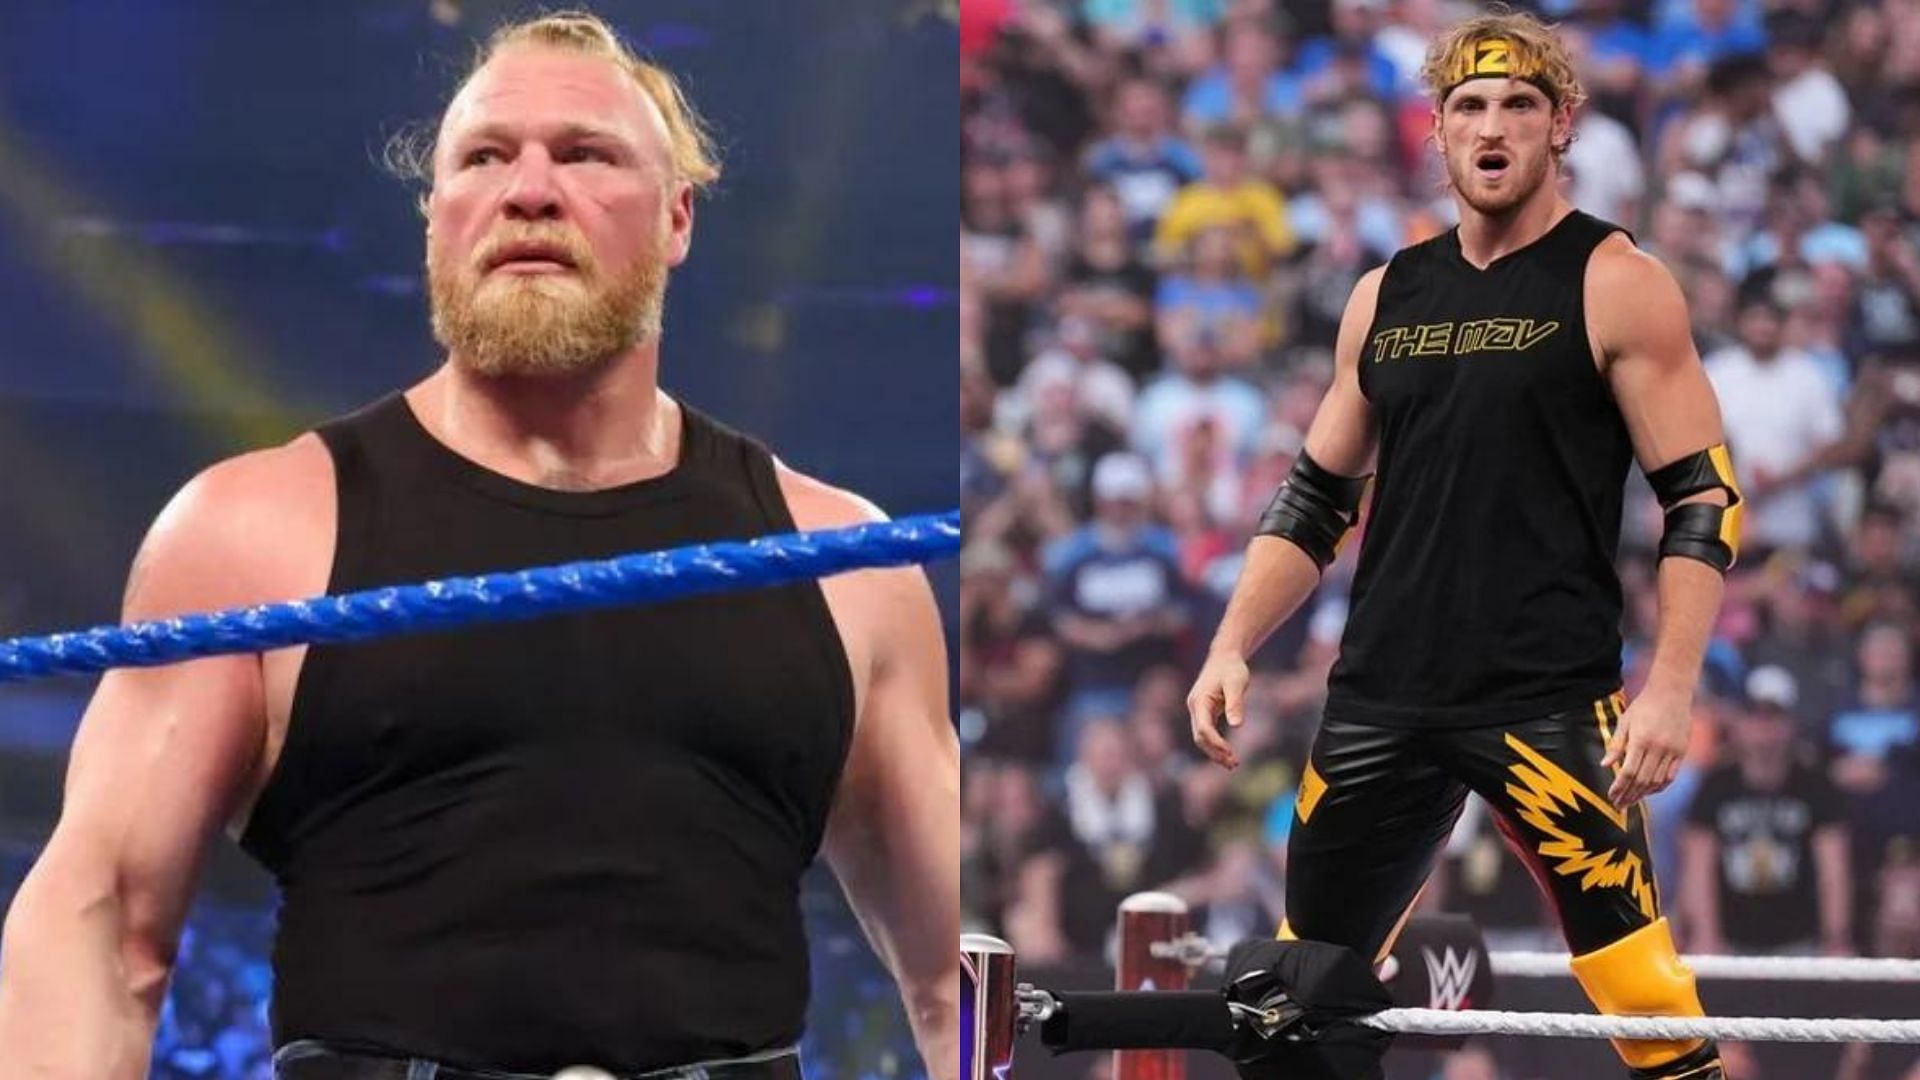 WWE stars, Brock Lesnar and Logan Paul